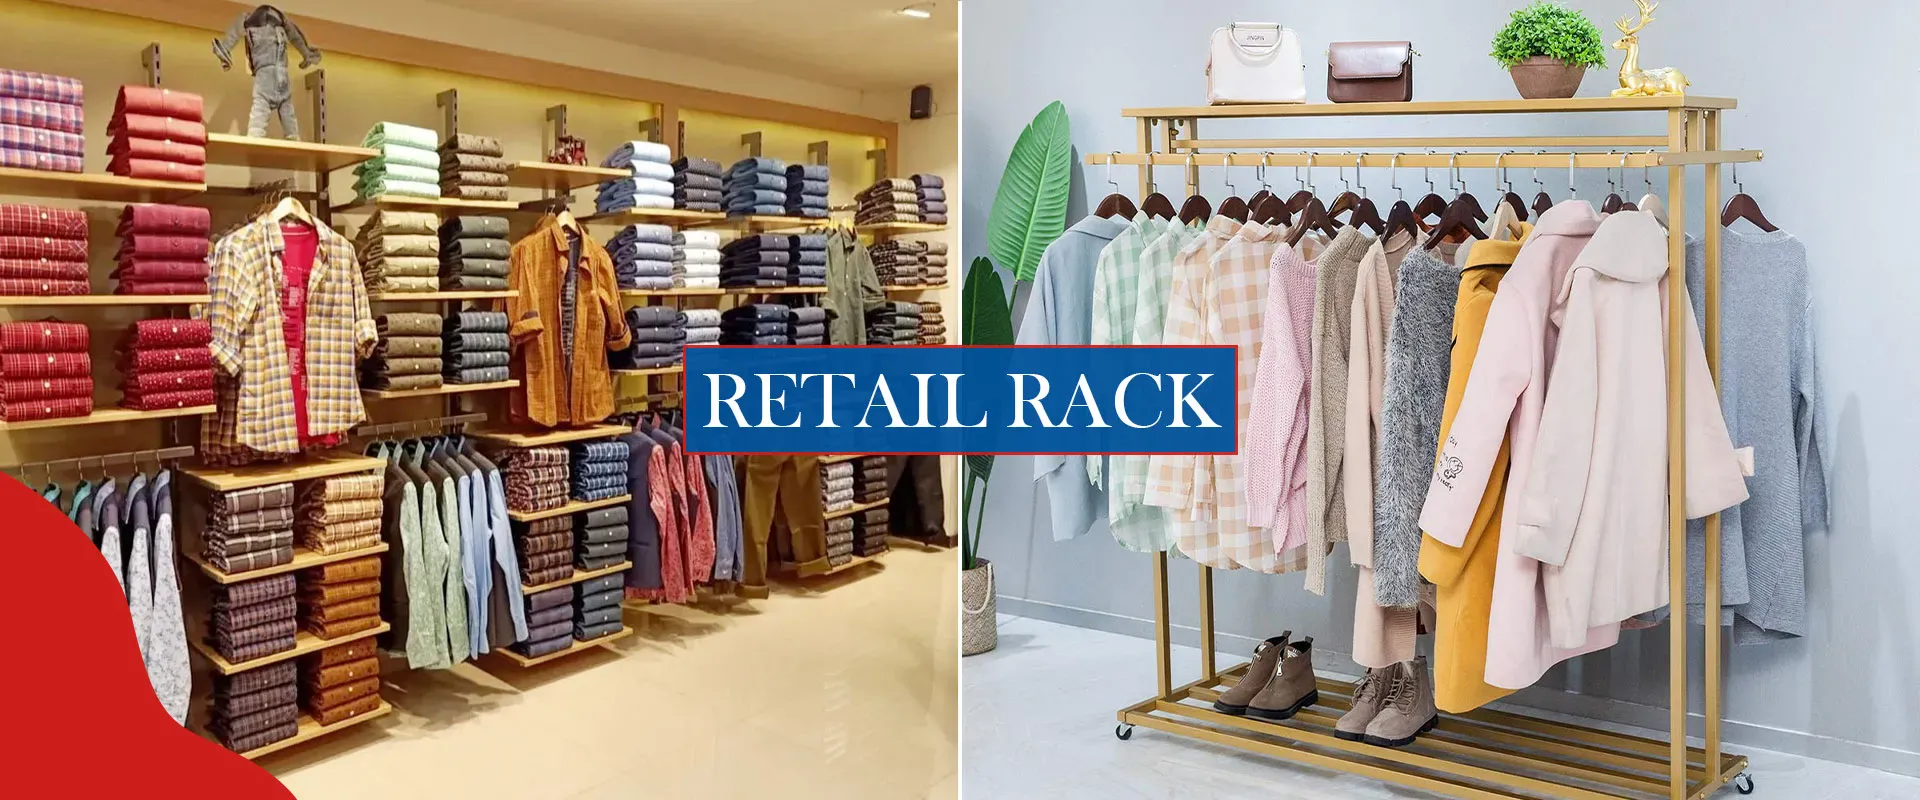 Retail Rack